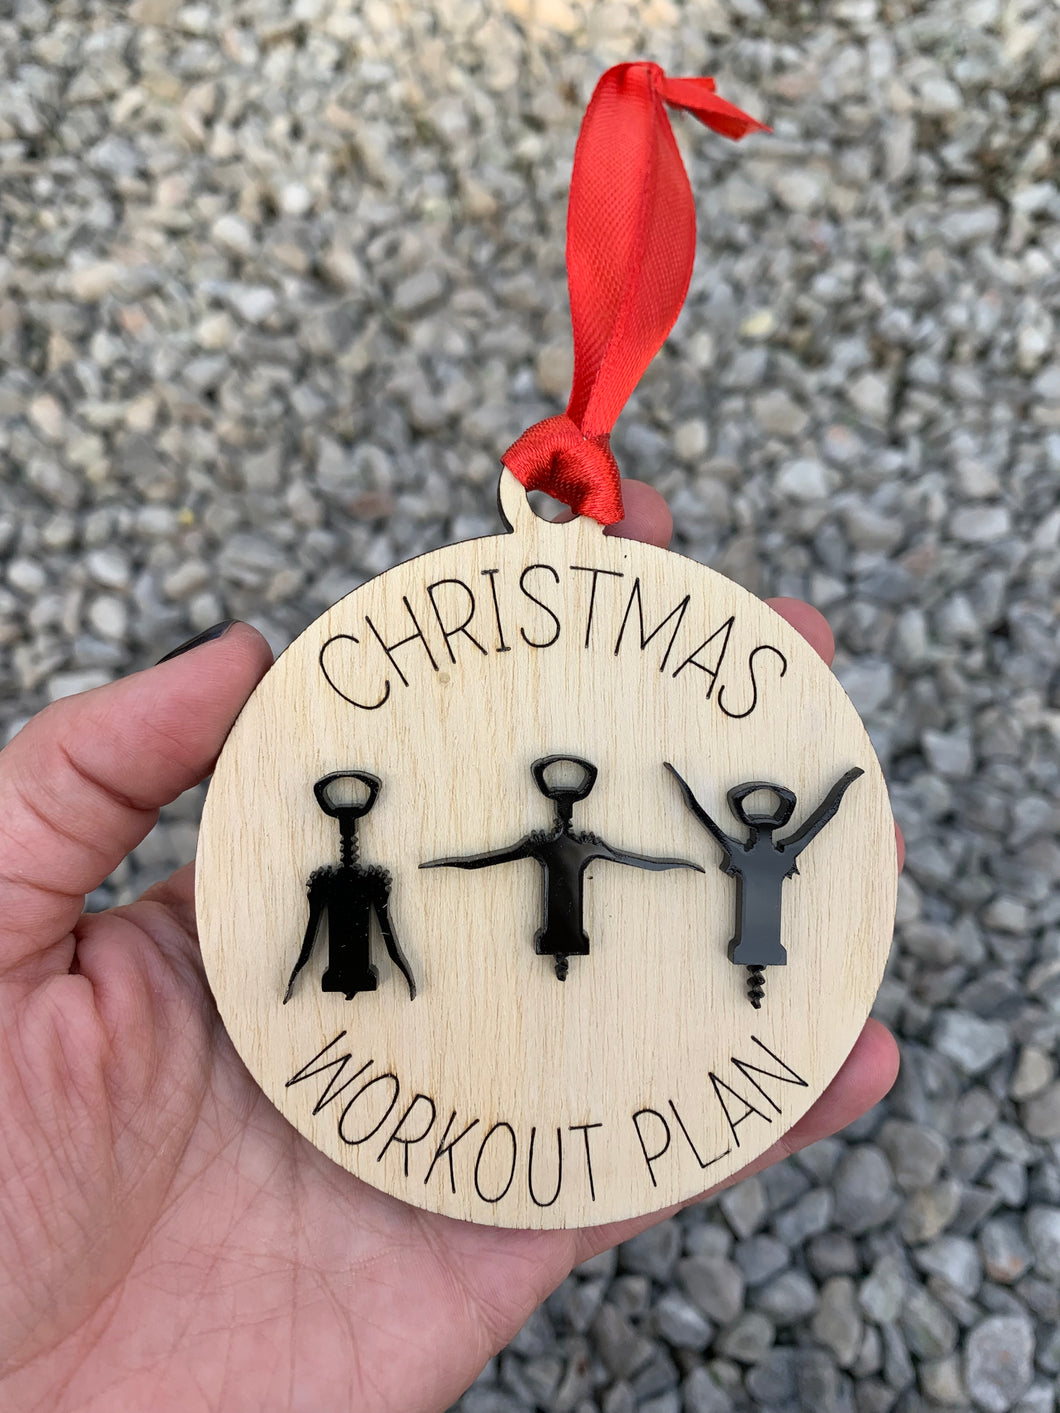 Christmas workout plan ornament